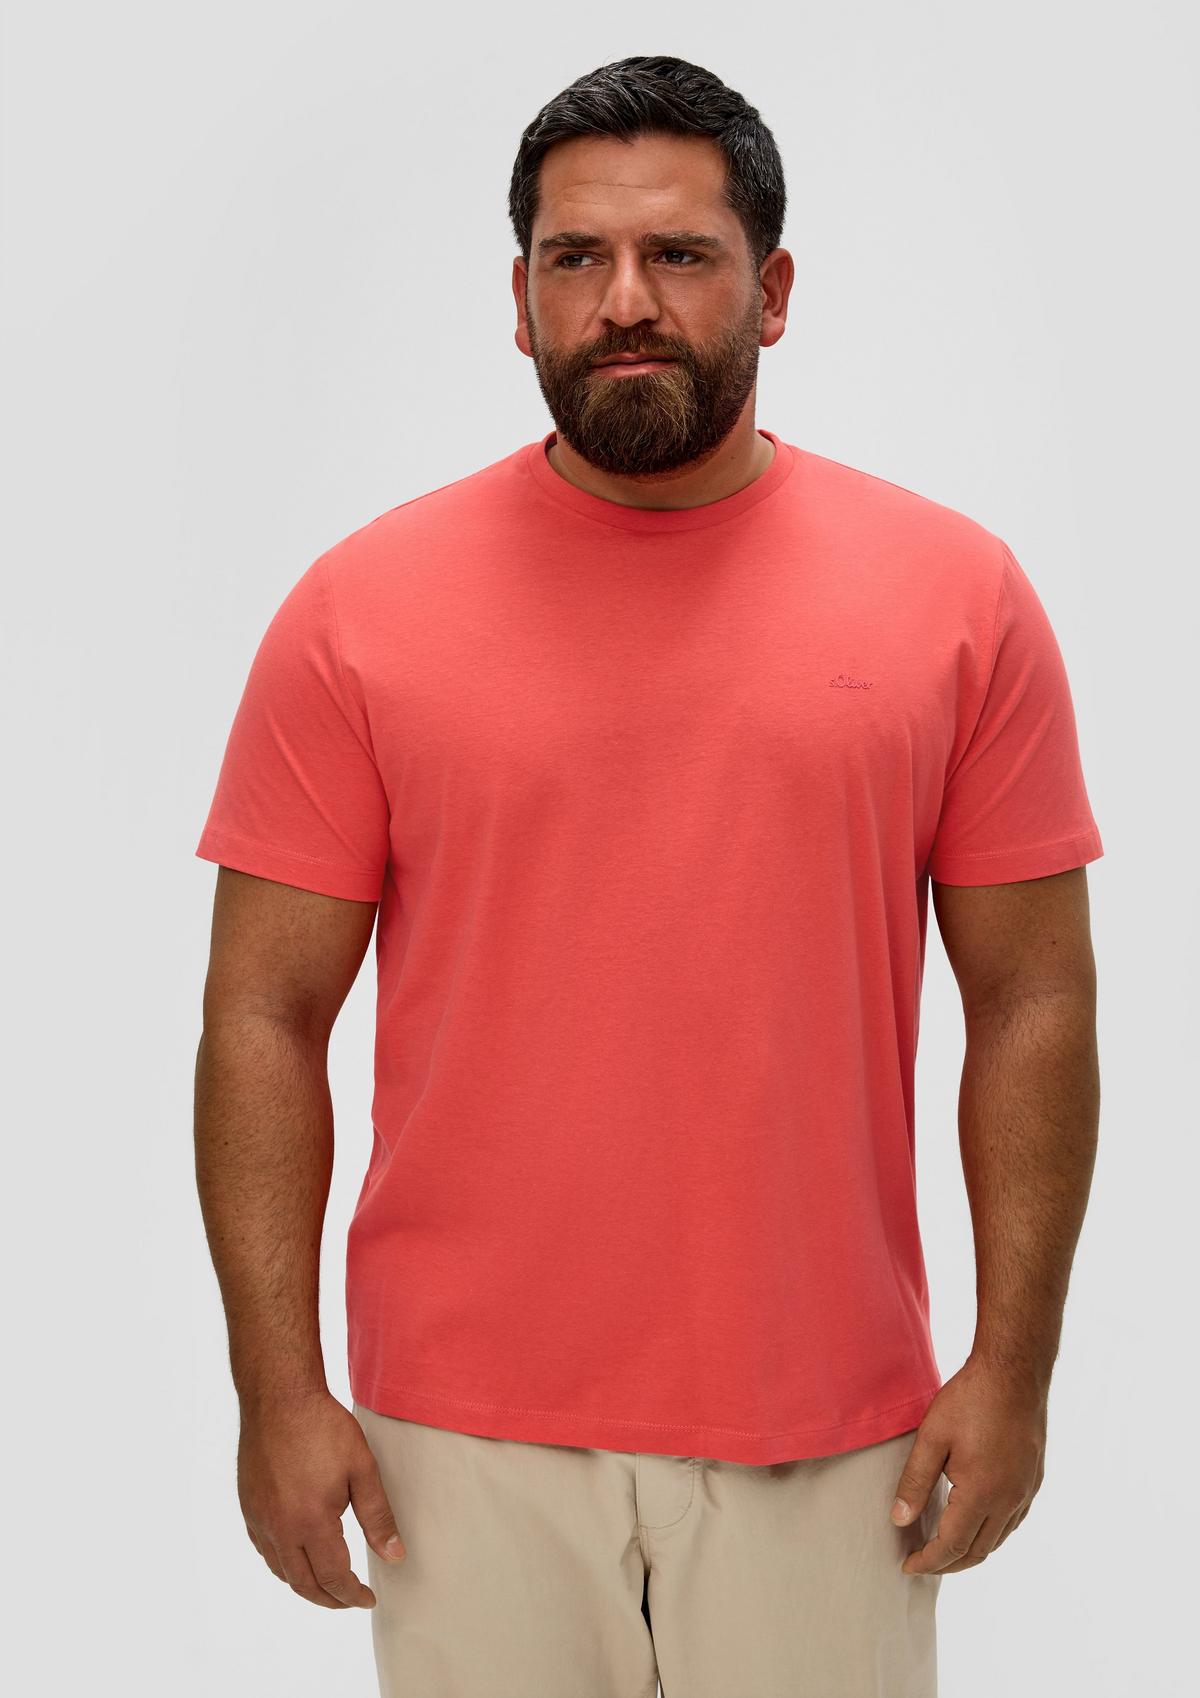 Plain T-Shirts Men for